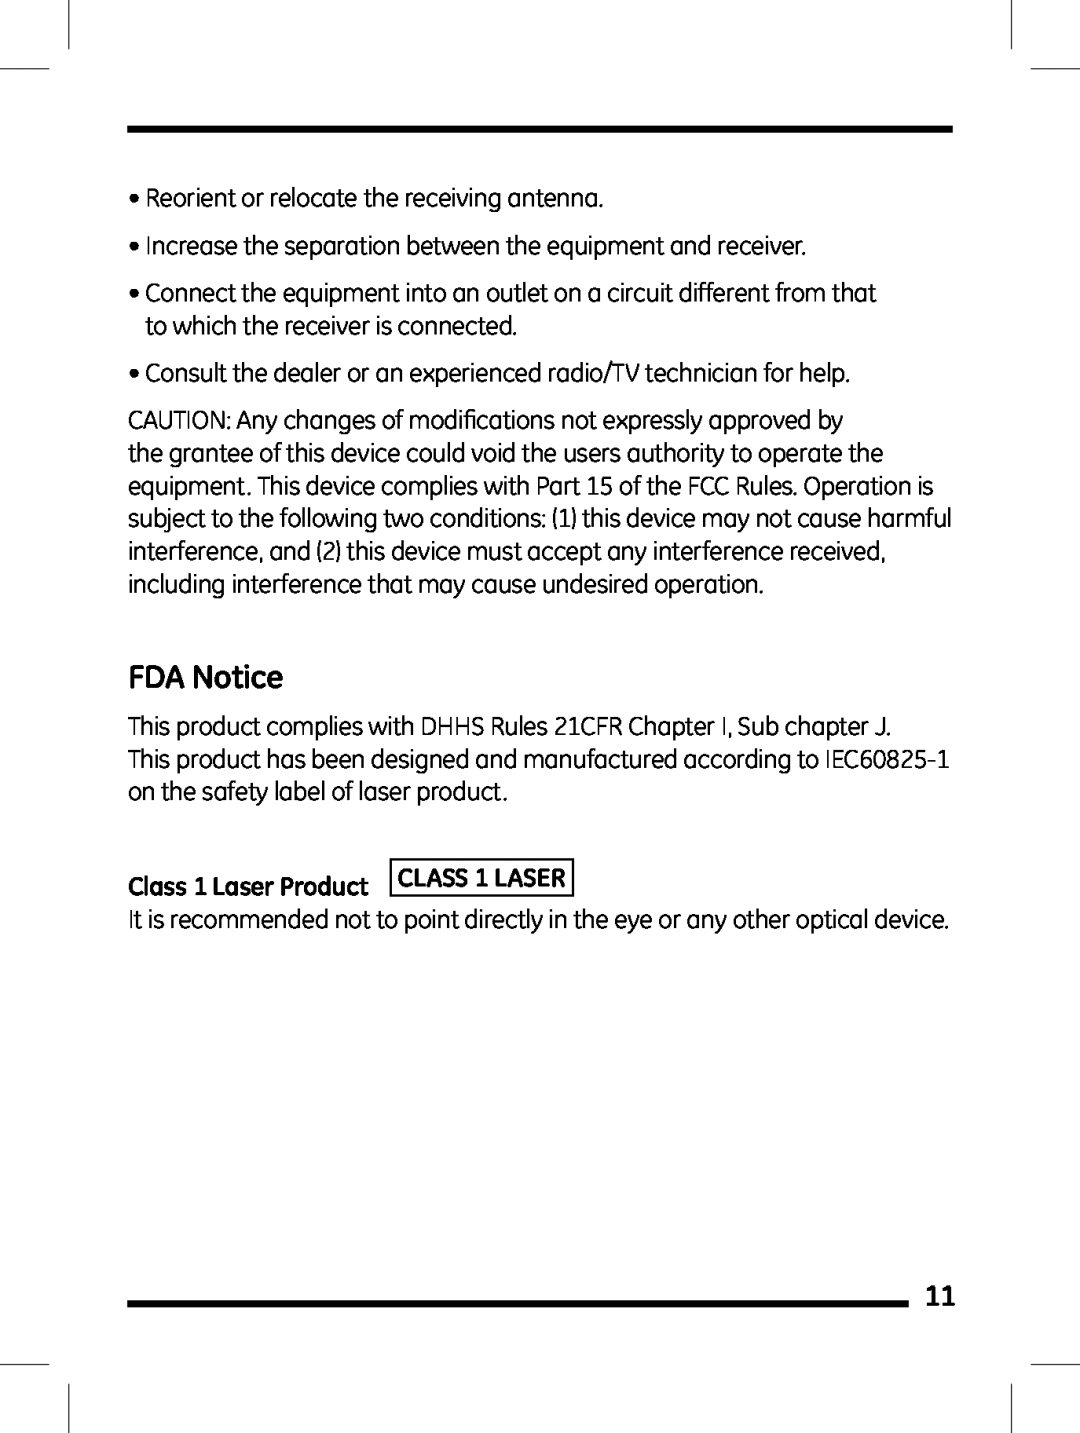 GE 98504 instruction manual FDA Notice, Class 1 Laser Product CLASS 1 LASER 